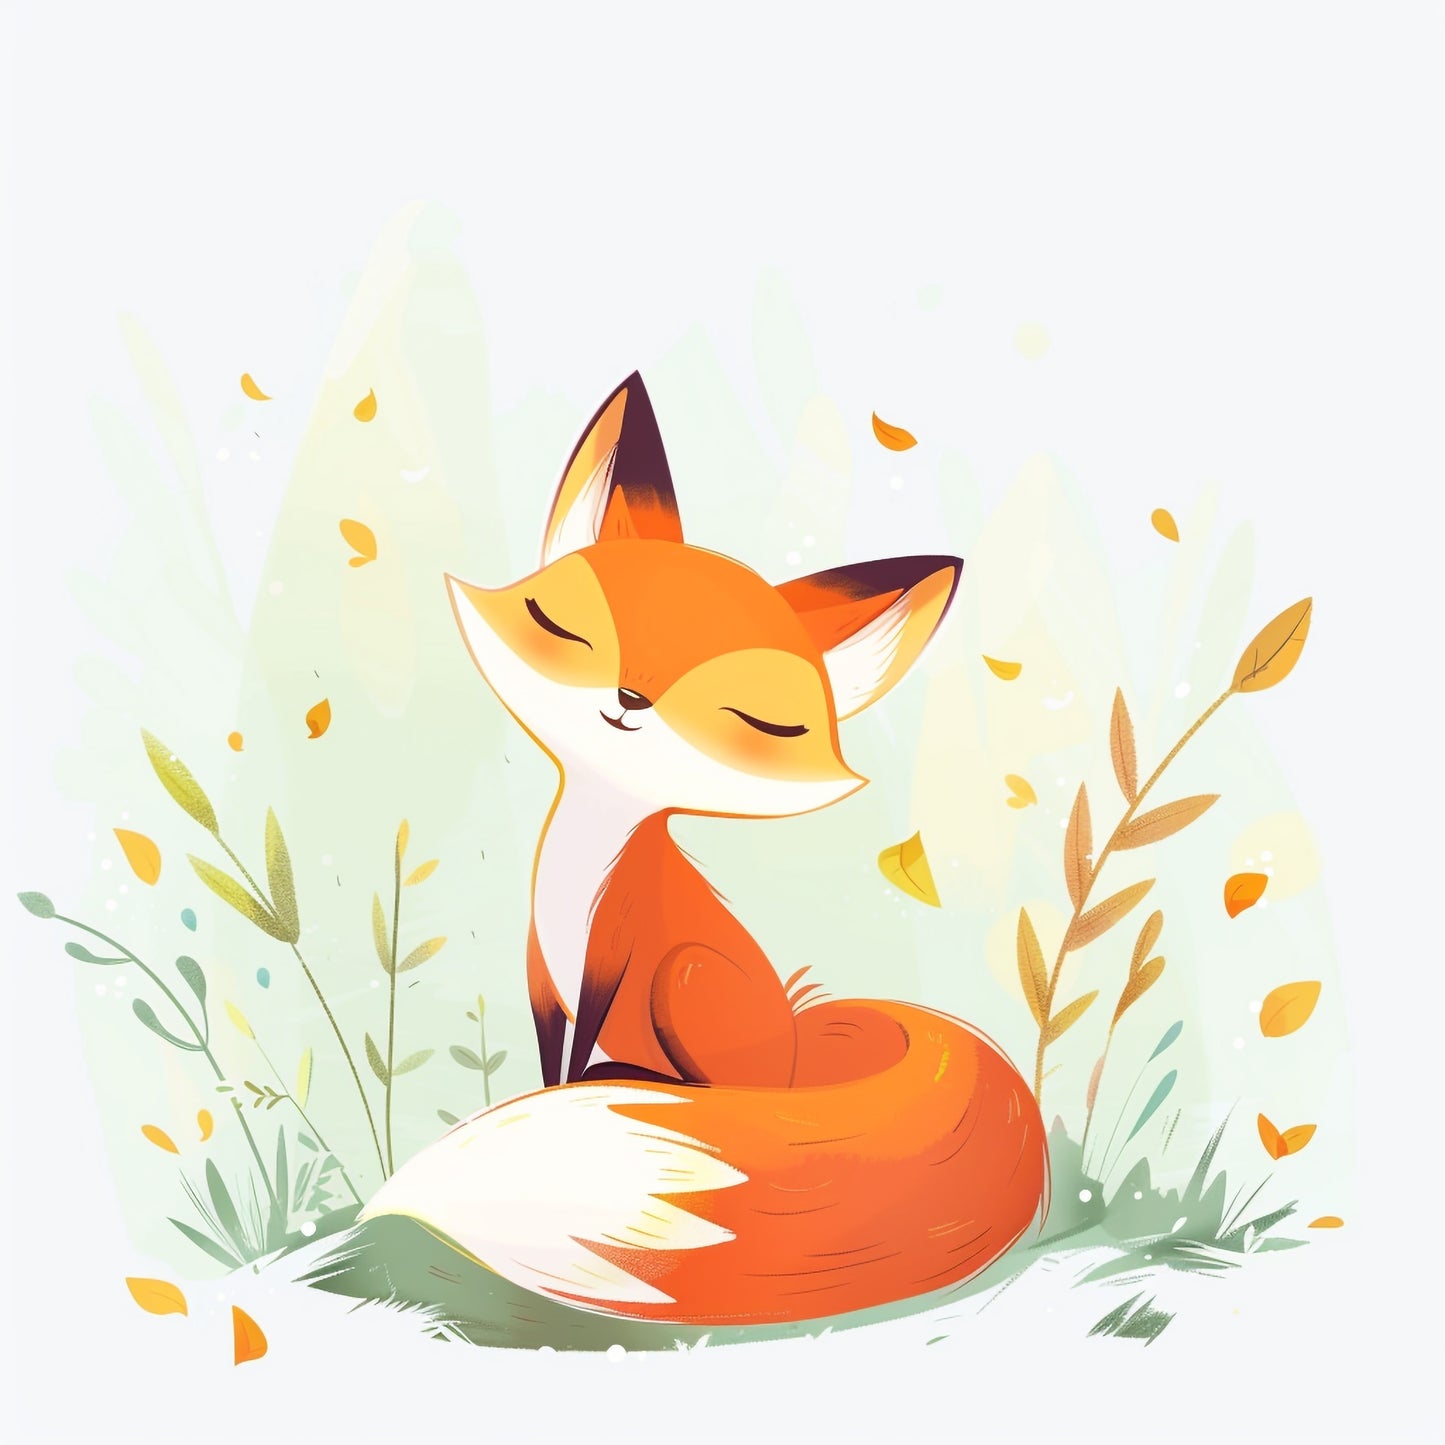 Dreamy Illustrated Fox Enjoying a Peaceful Moment